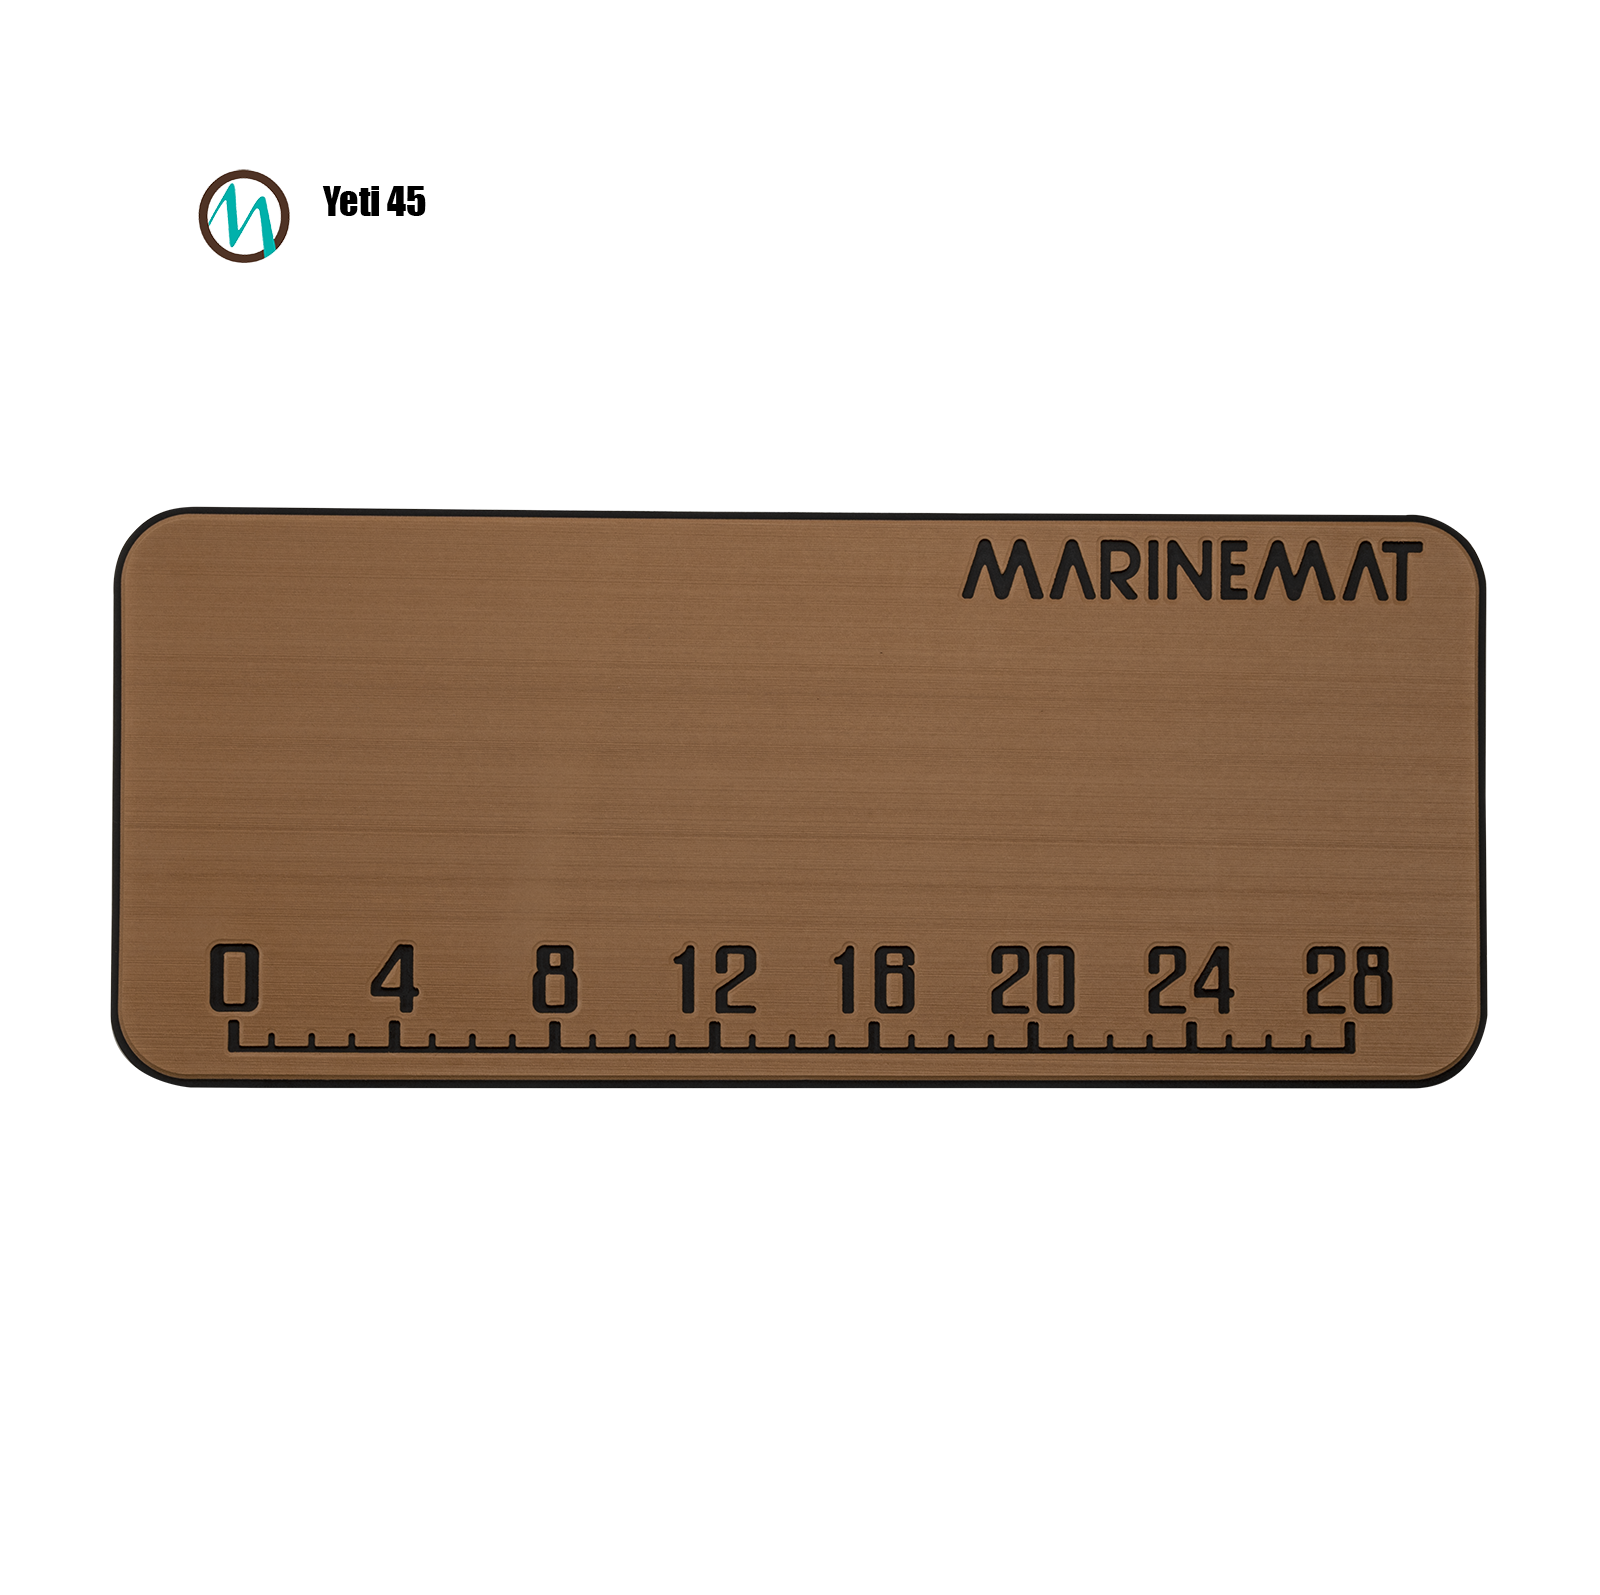 RTIC 45 MarineMat Cooler Pad: MarineMat